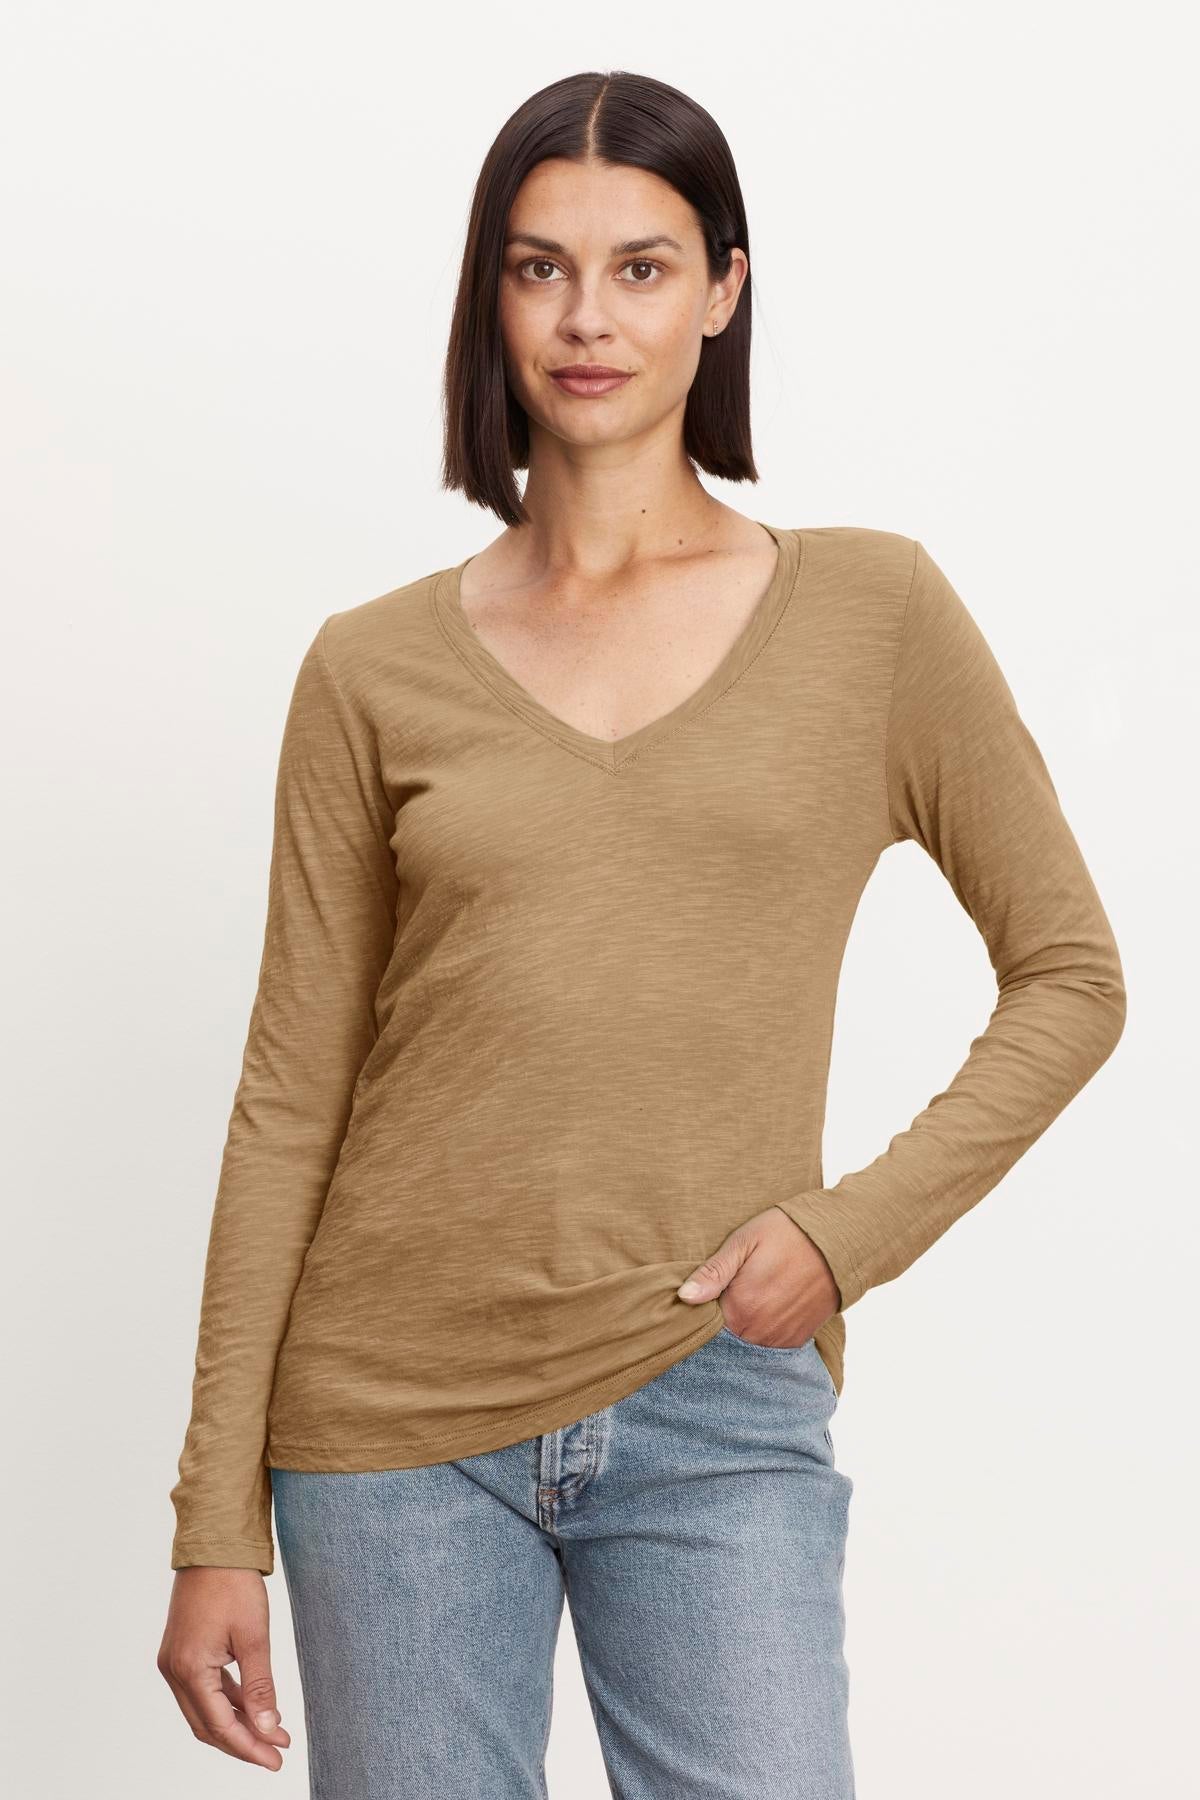 A woman wearing a Velvet by Graham & Spencer BLAIRE ORIGINAL SLUB TEE tan v - neck t - shirt.-35782759088321